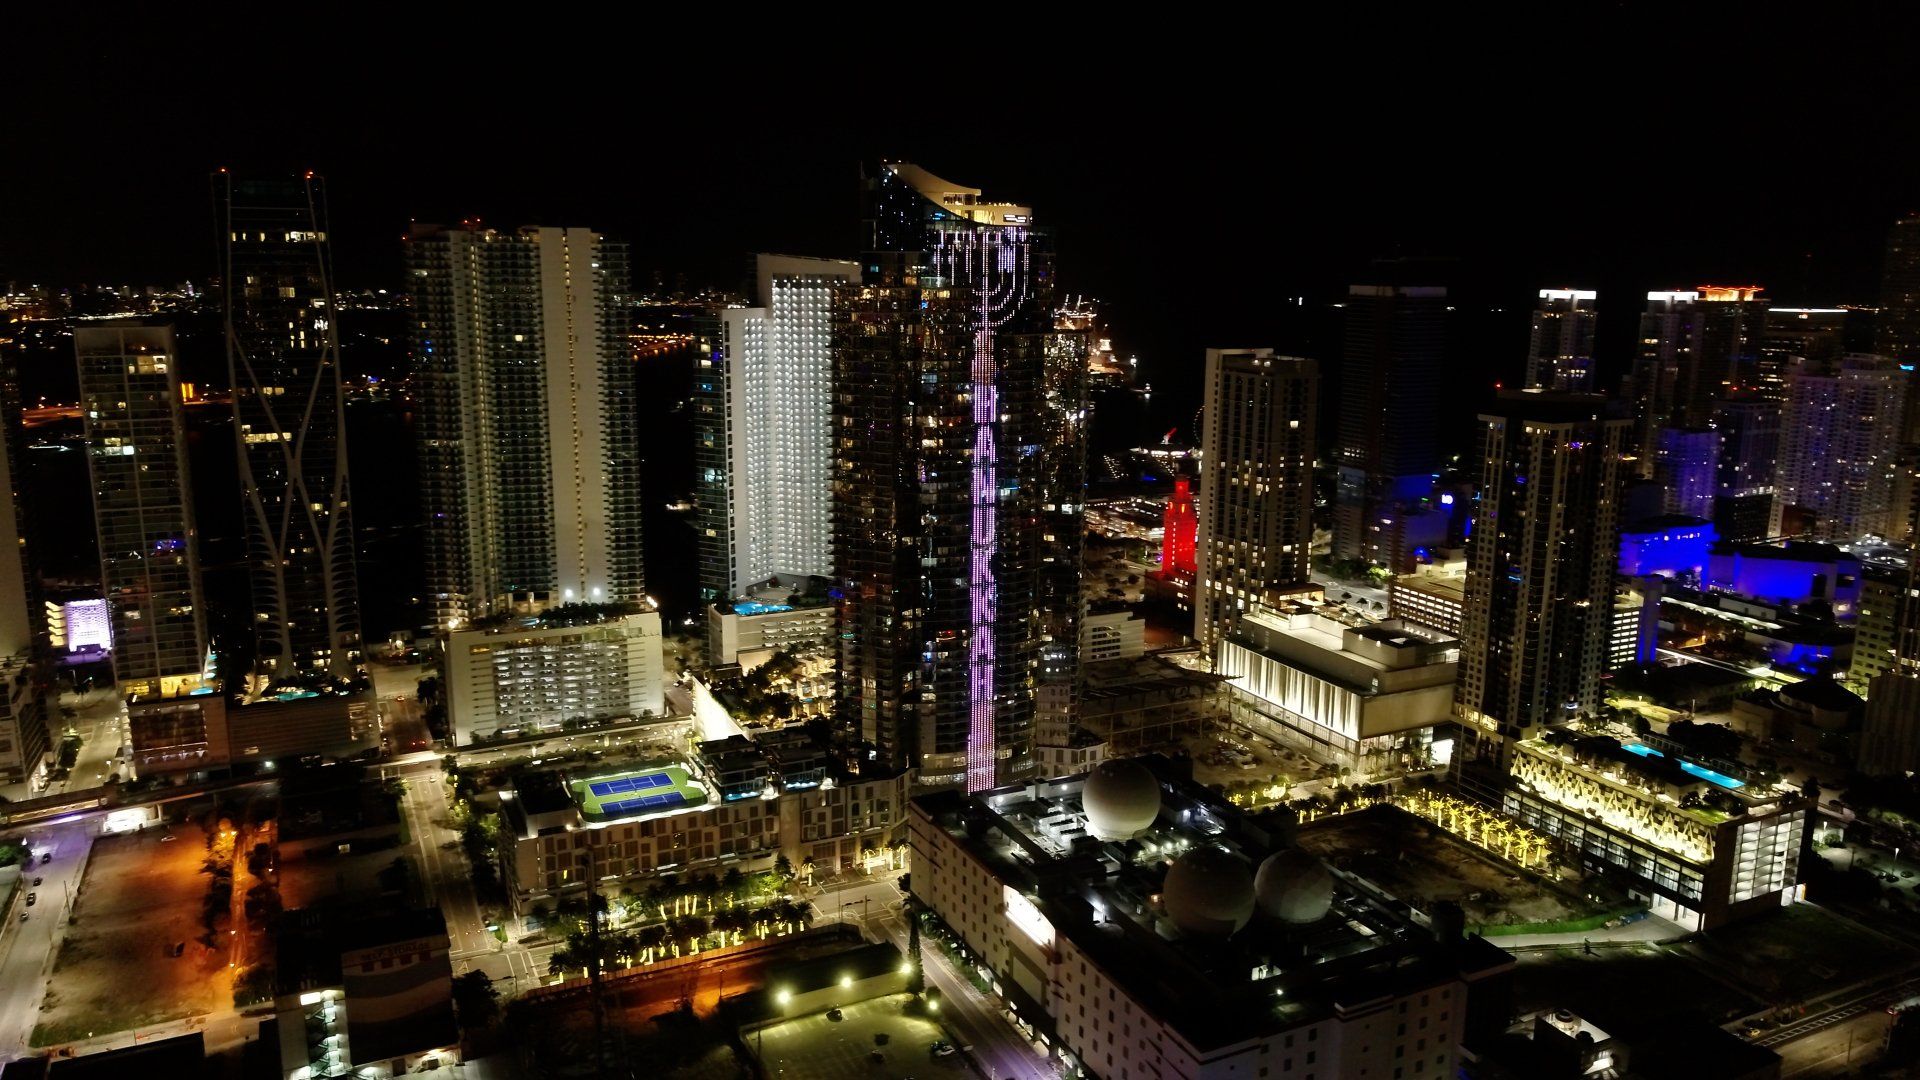 Largest Electronic Hanukkah Menorah: Paramount Miami Worldcenter sets world record